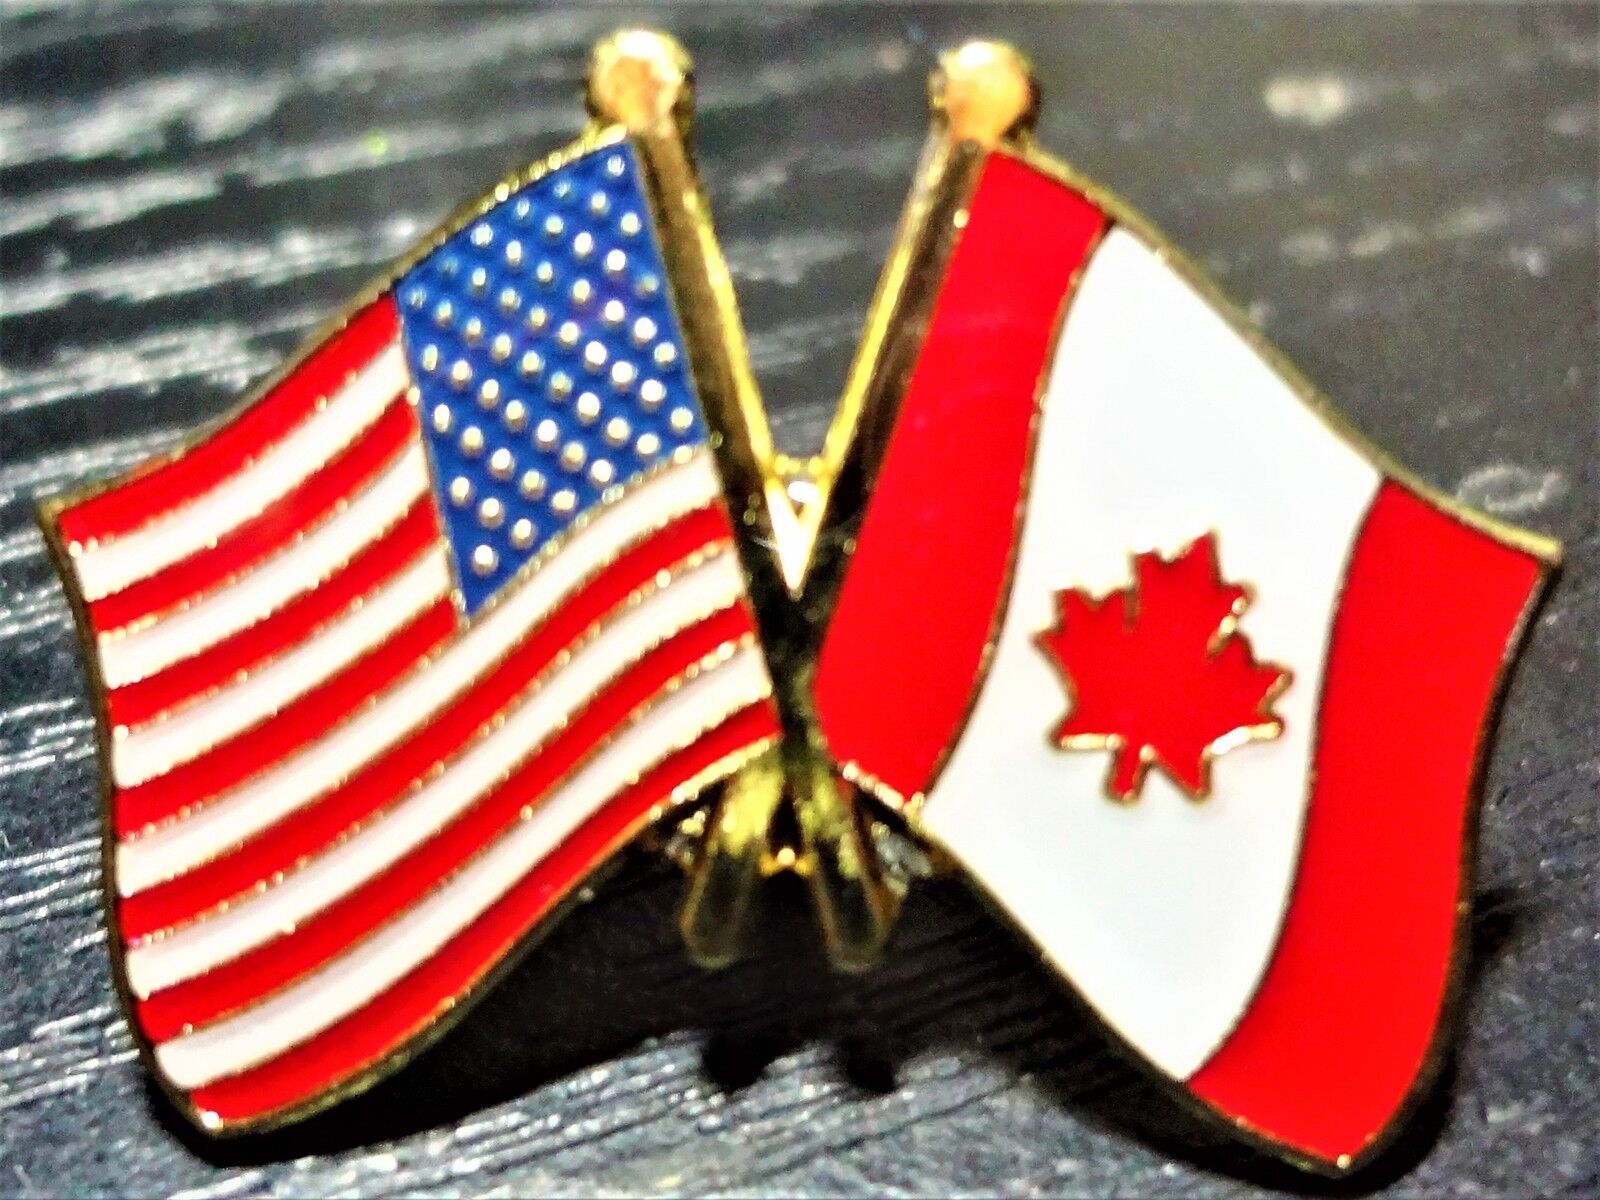 USA & CANADA UNITED STATES & CANADA FRIENDSHIP Lapel Pin Badge *NEW*